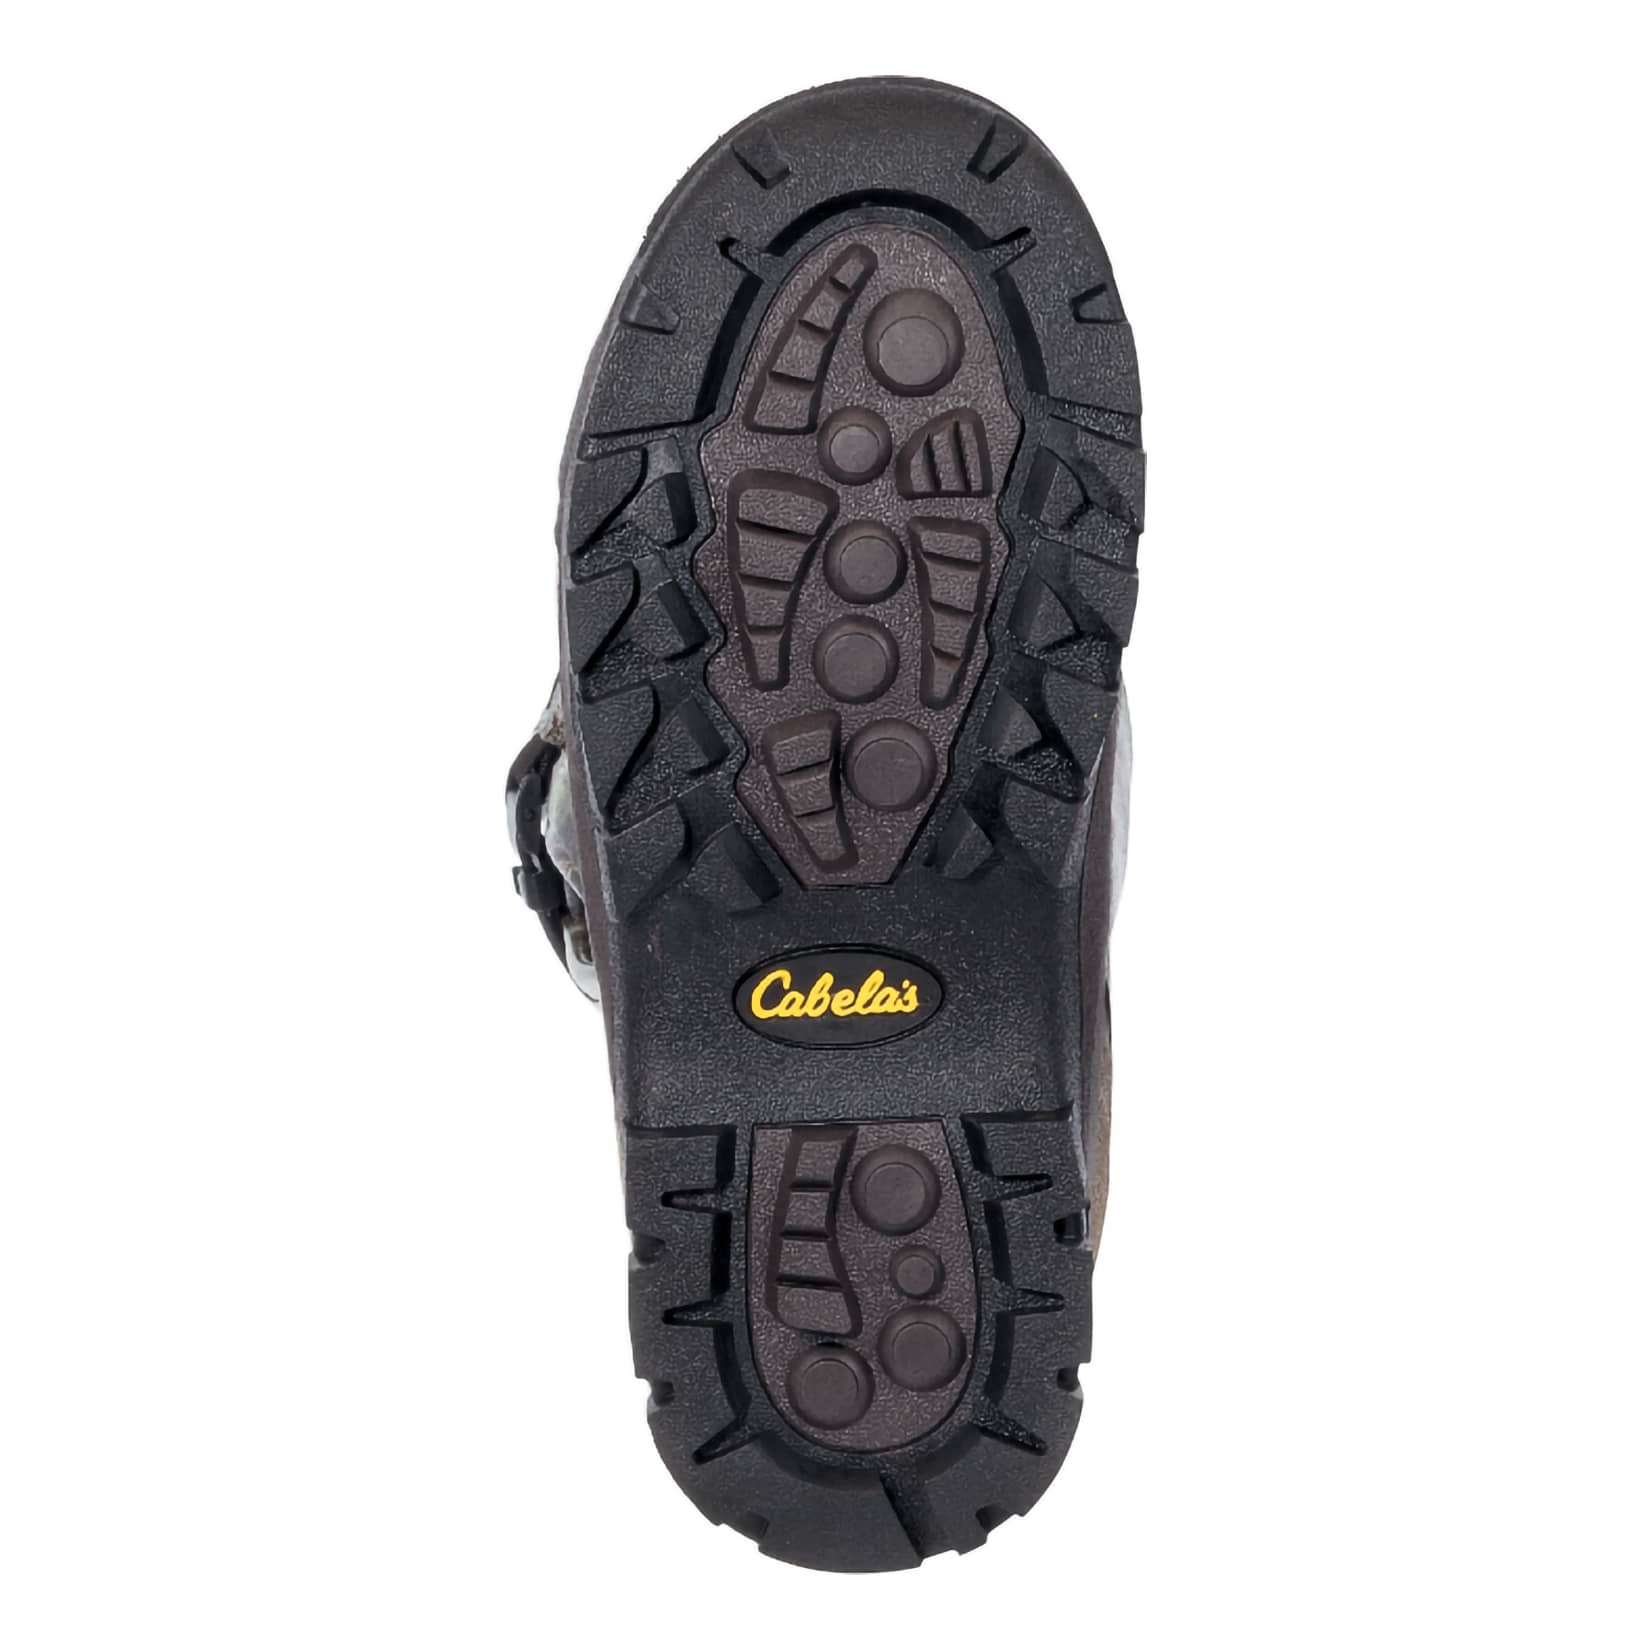 Cabela’s Men’s Zoned Comfort Trac 2,000-Gram Rubber Boots - sole